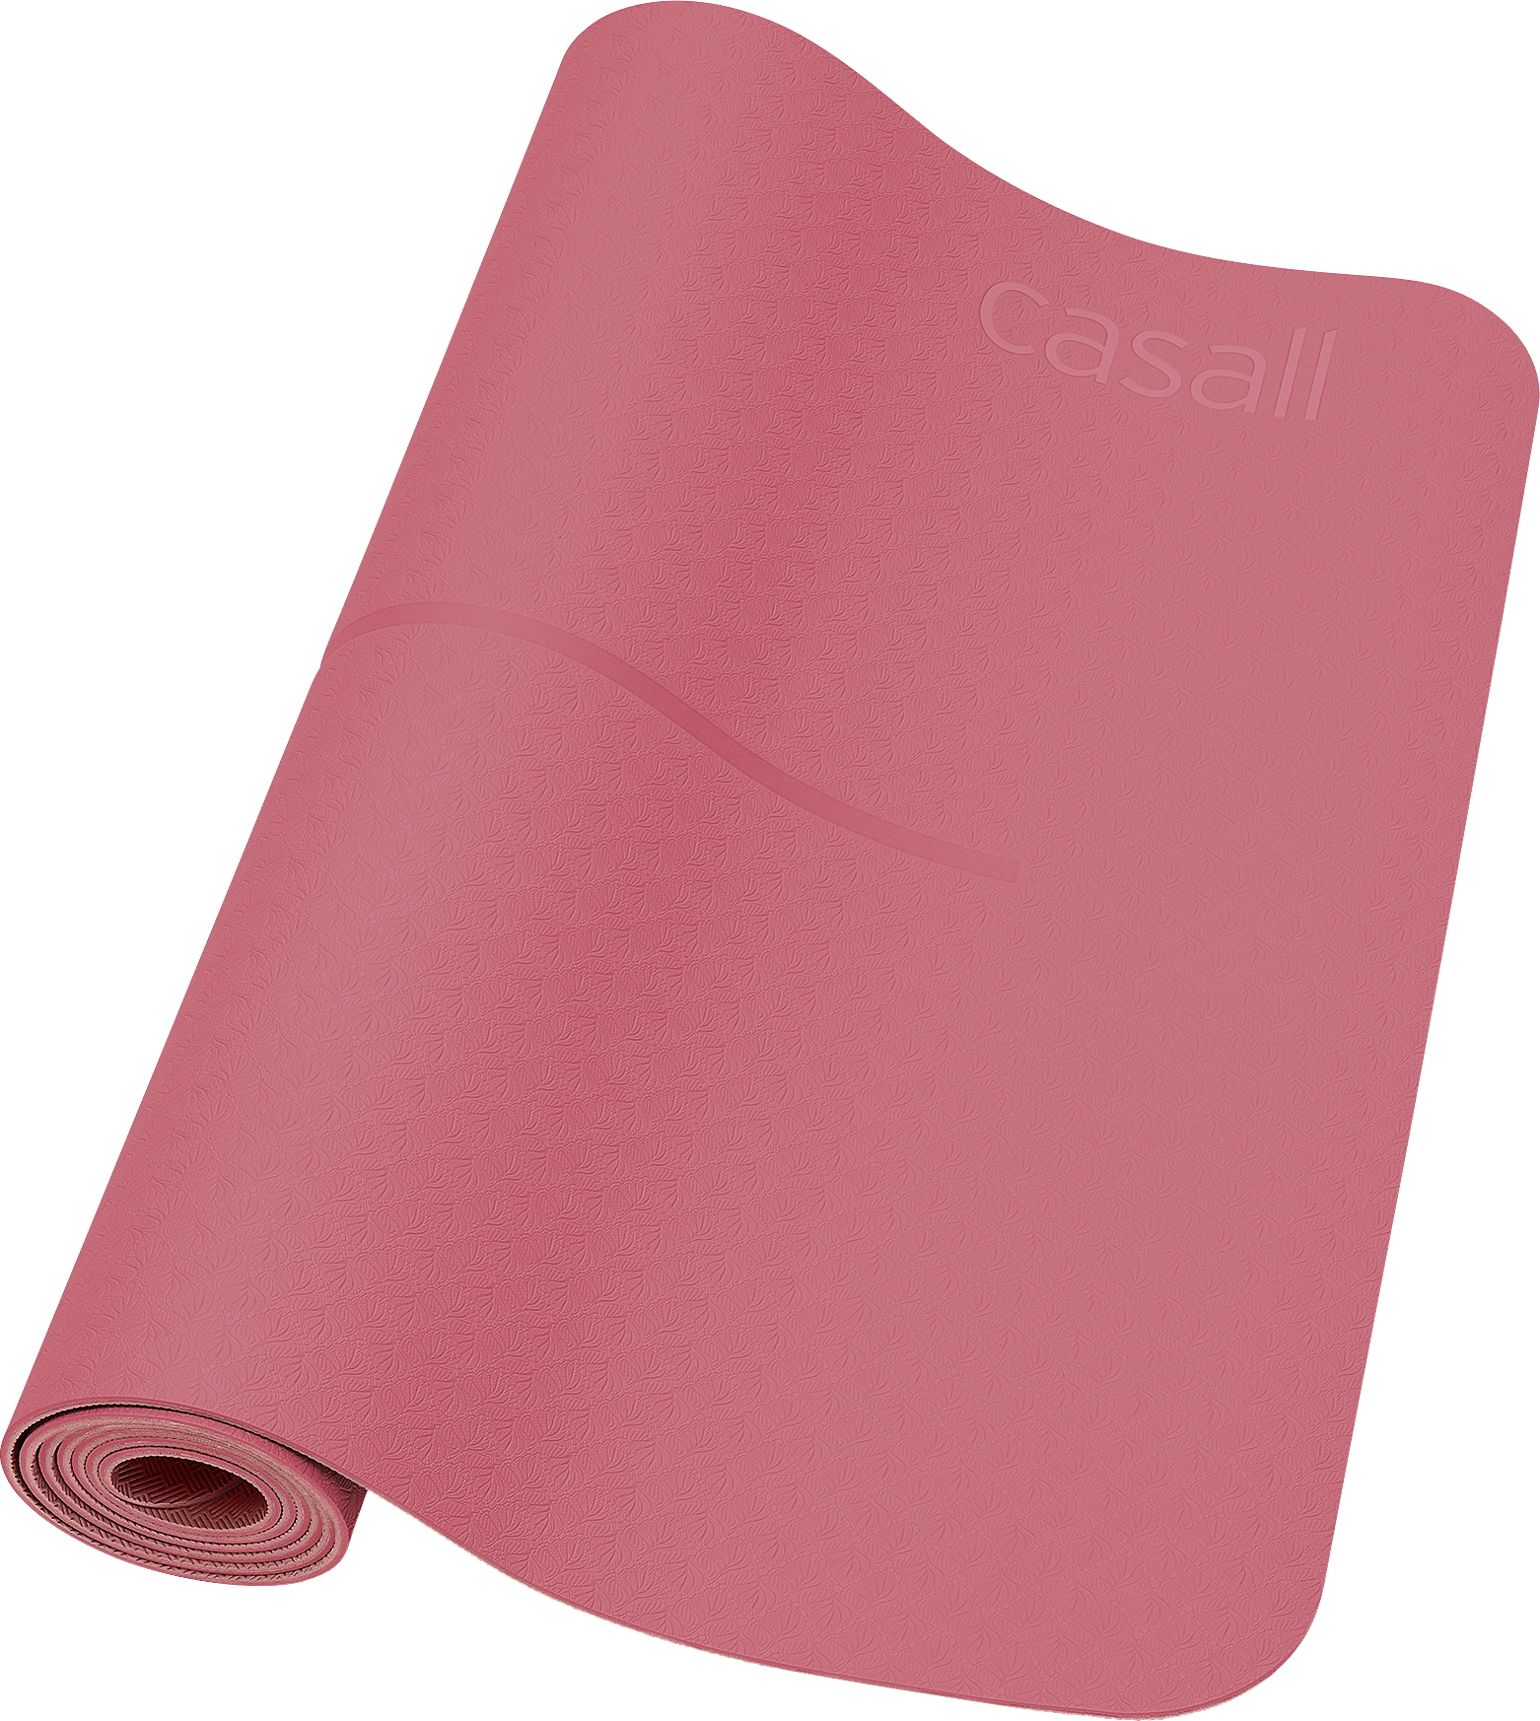 Casall Yoga Mat Position 4 mm Mineral Pink